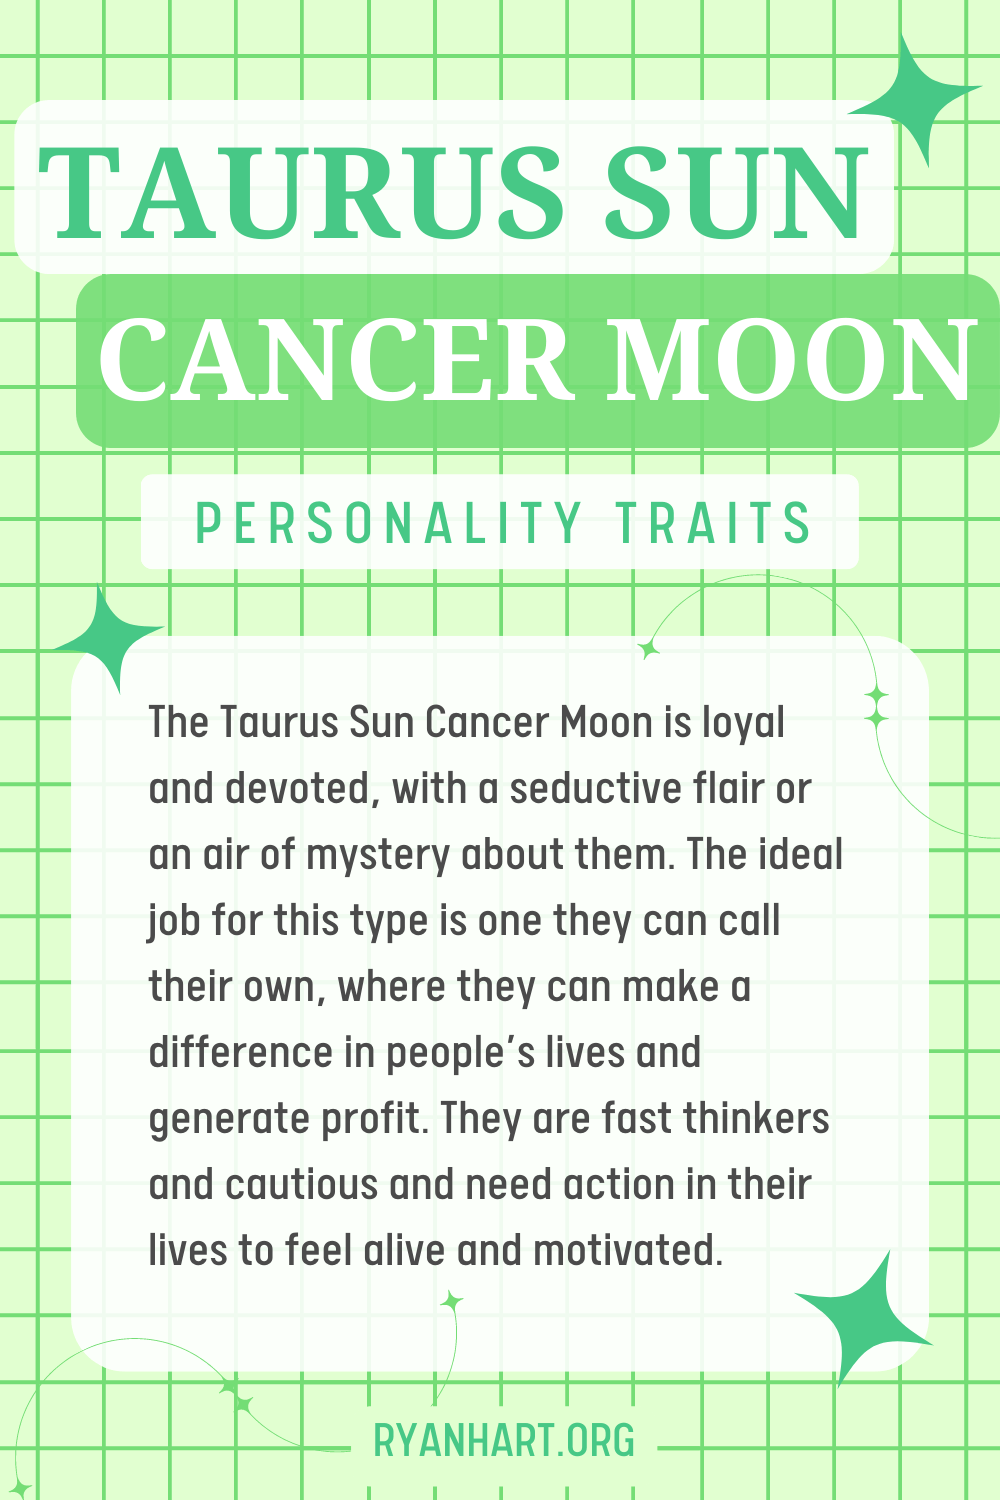  Taurus Sun Cancer Moon លក្ខណៈបុគ្គលិកលក្ខណៈ